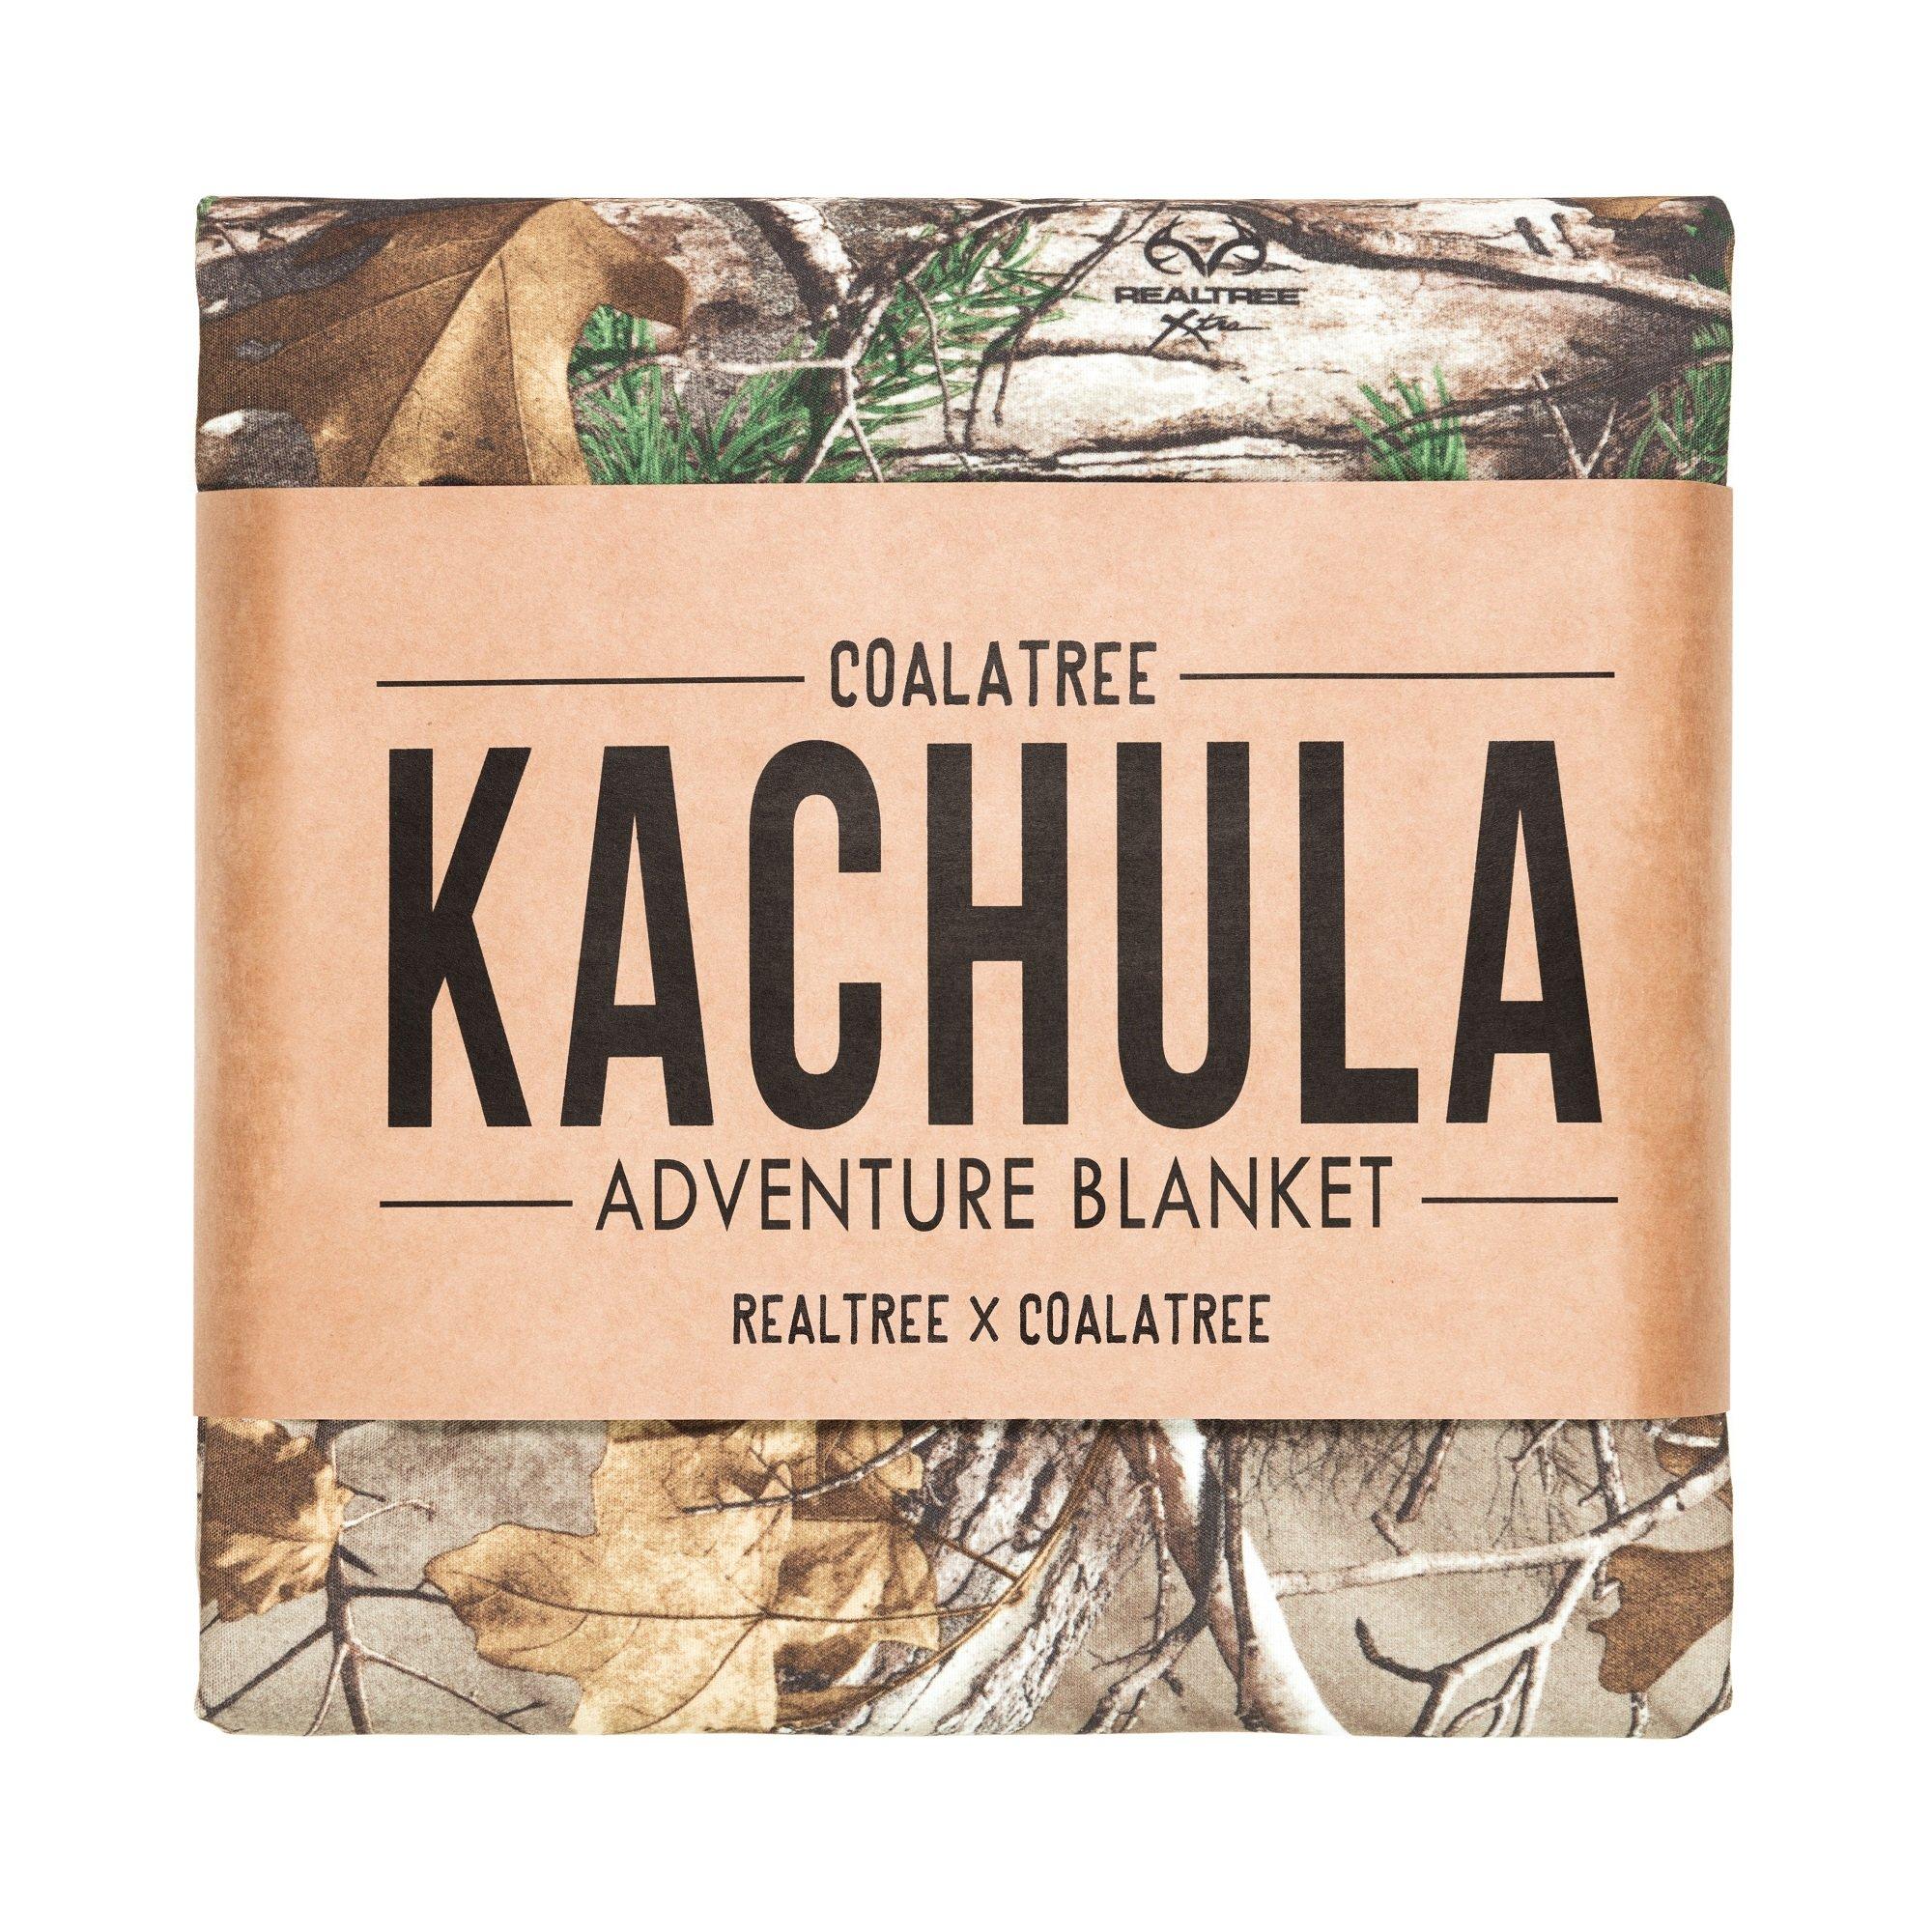 Kachula Adventure Blanket in Realtree Xtra